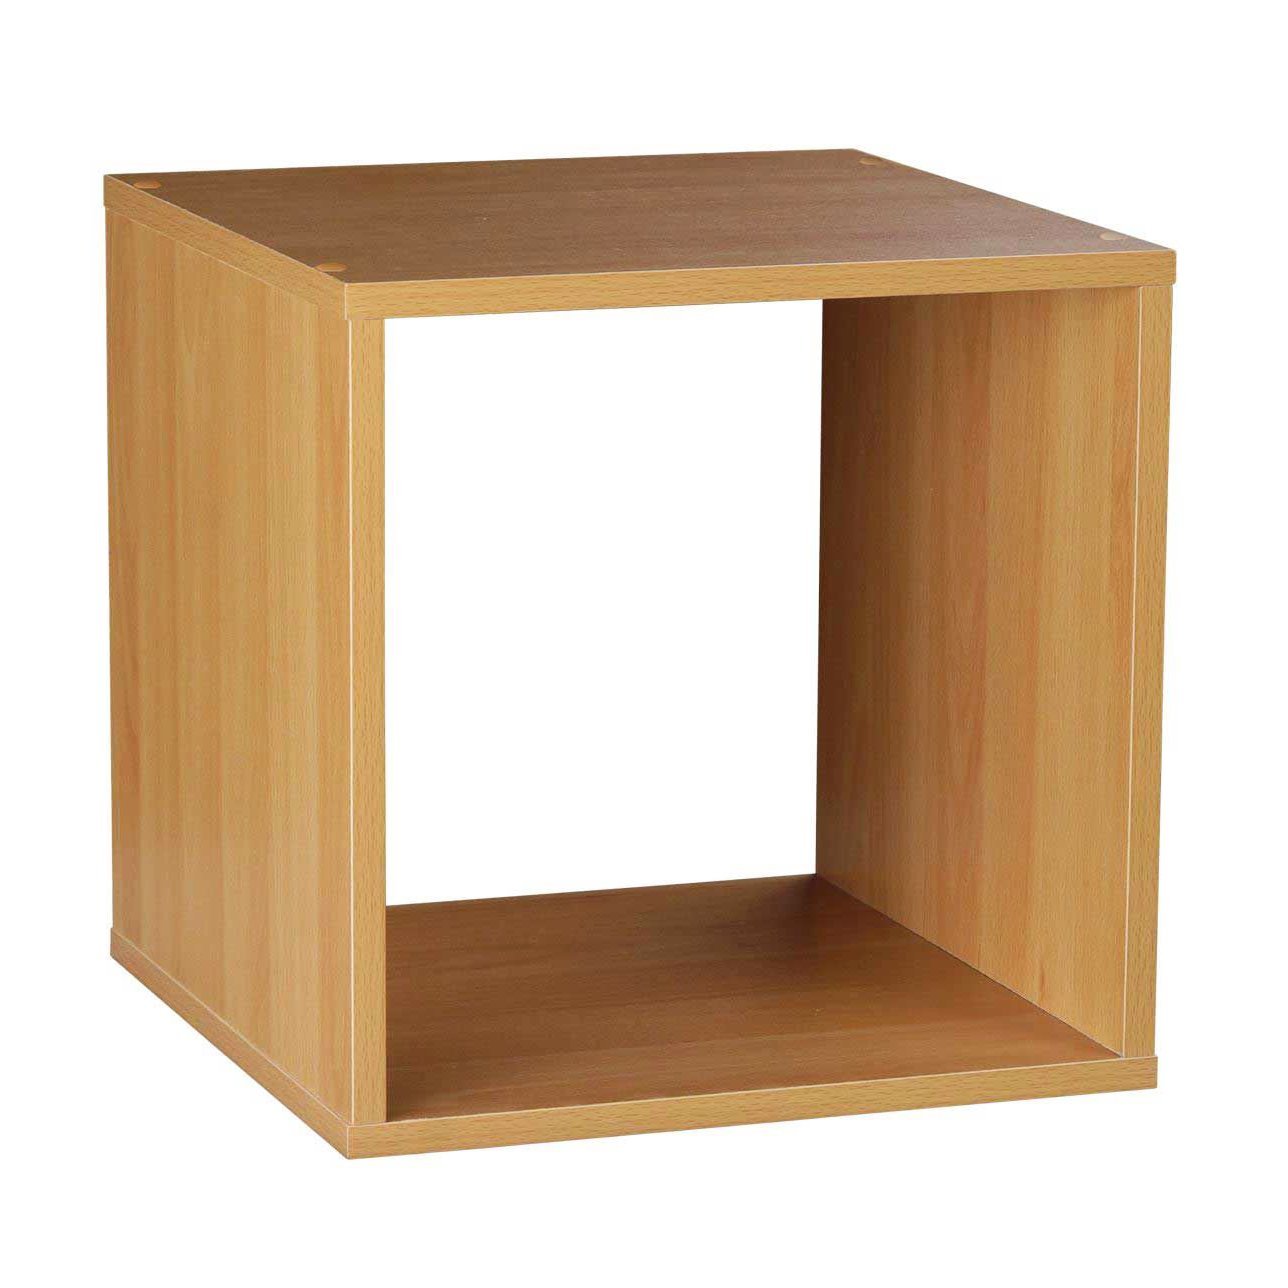 1 Tier Storage Cube Wooden Shelf, Best Storage Shelving Units Uk